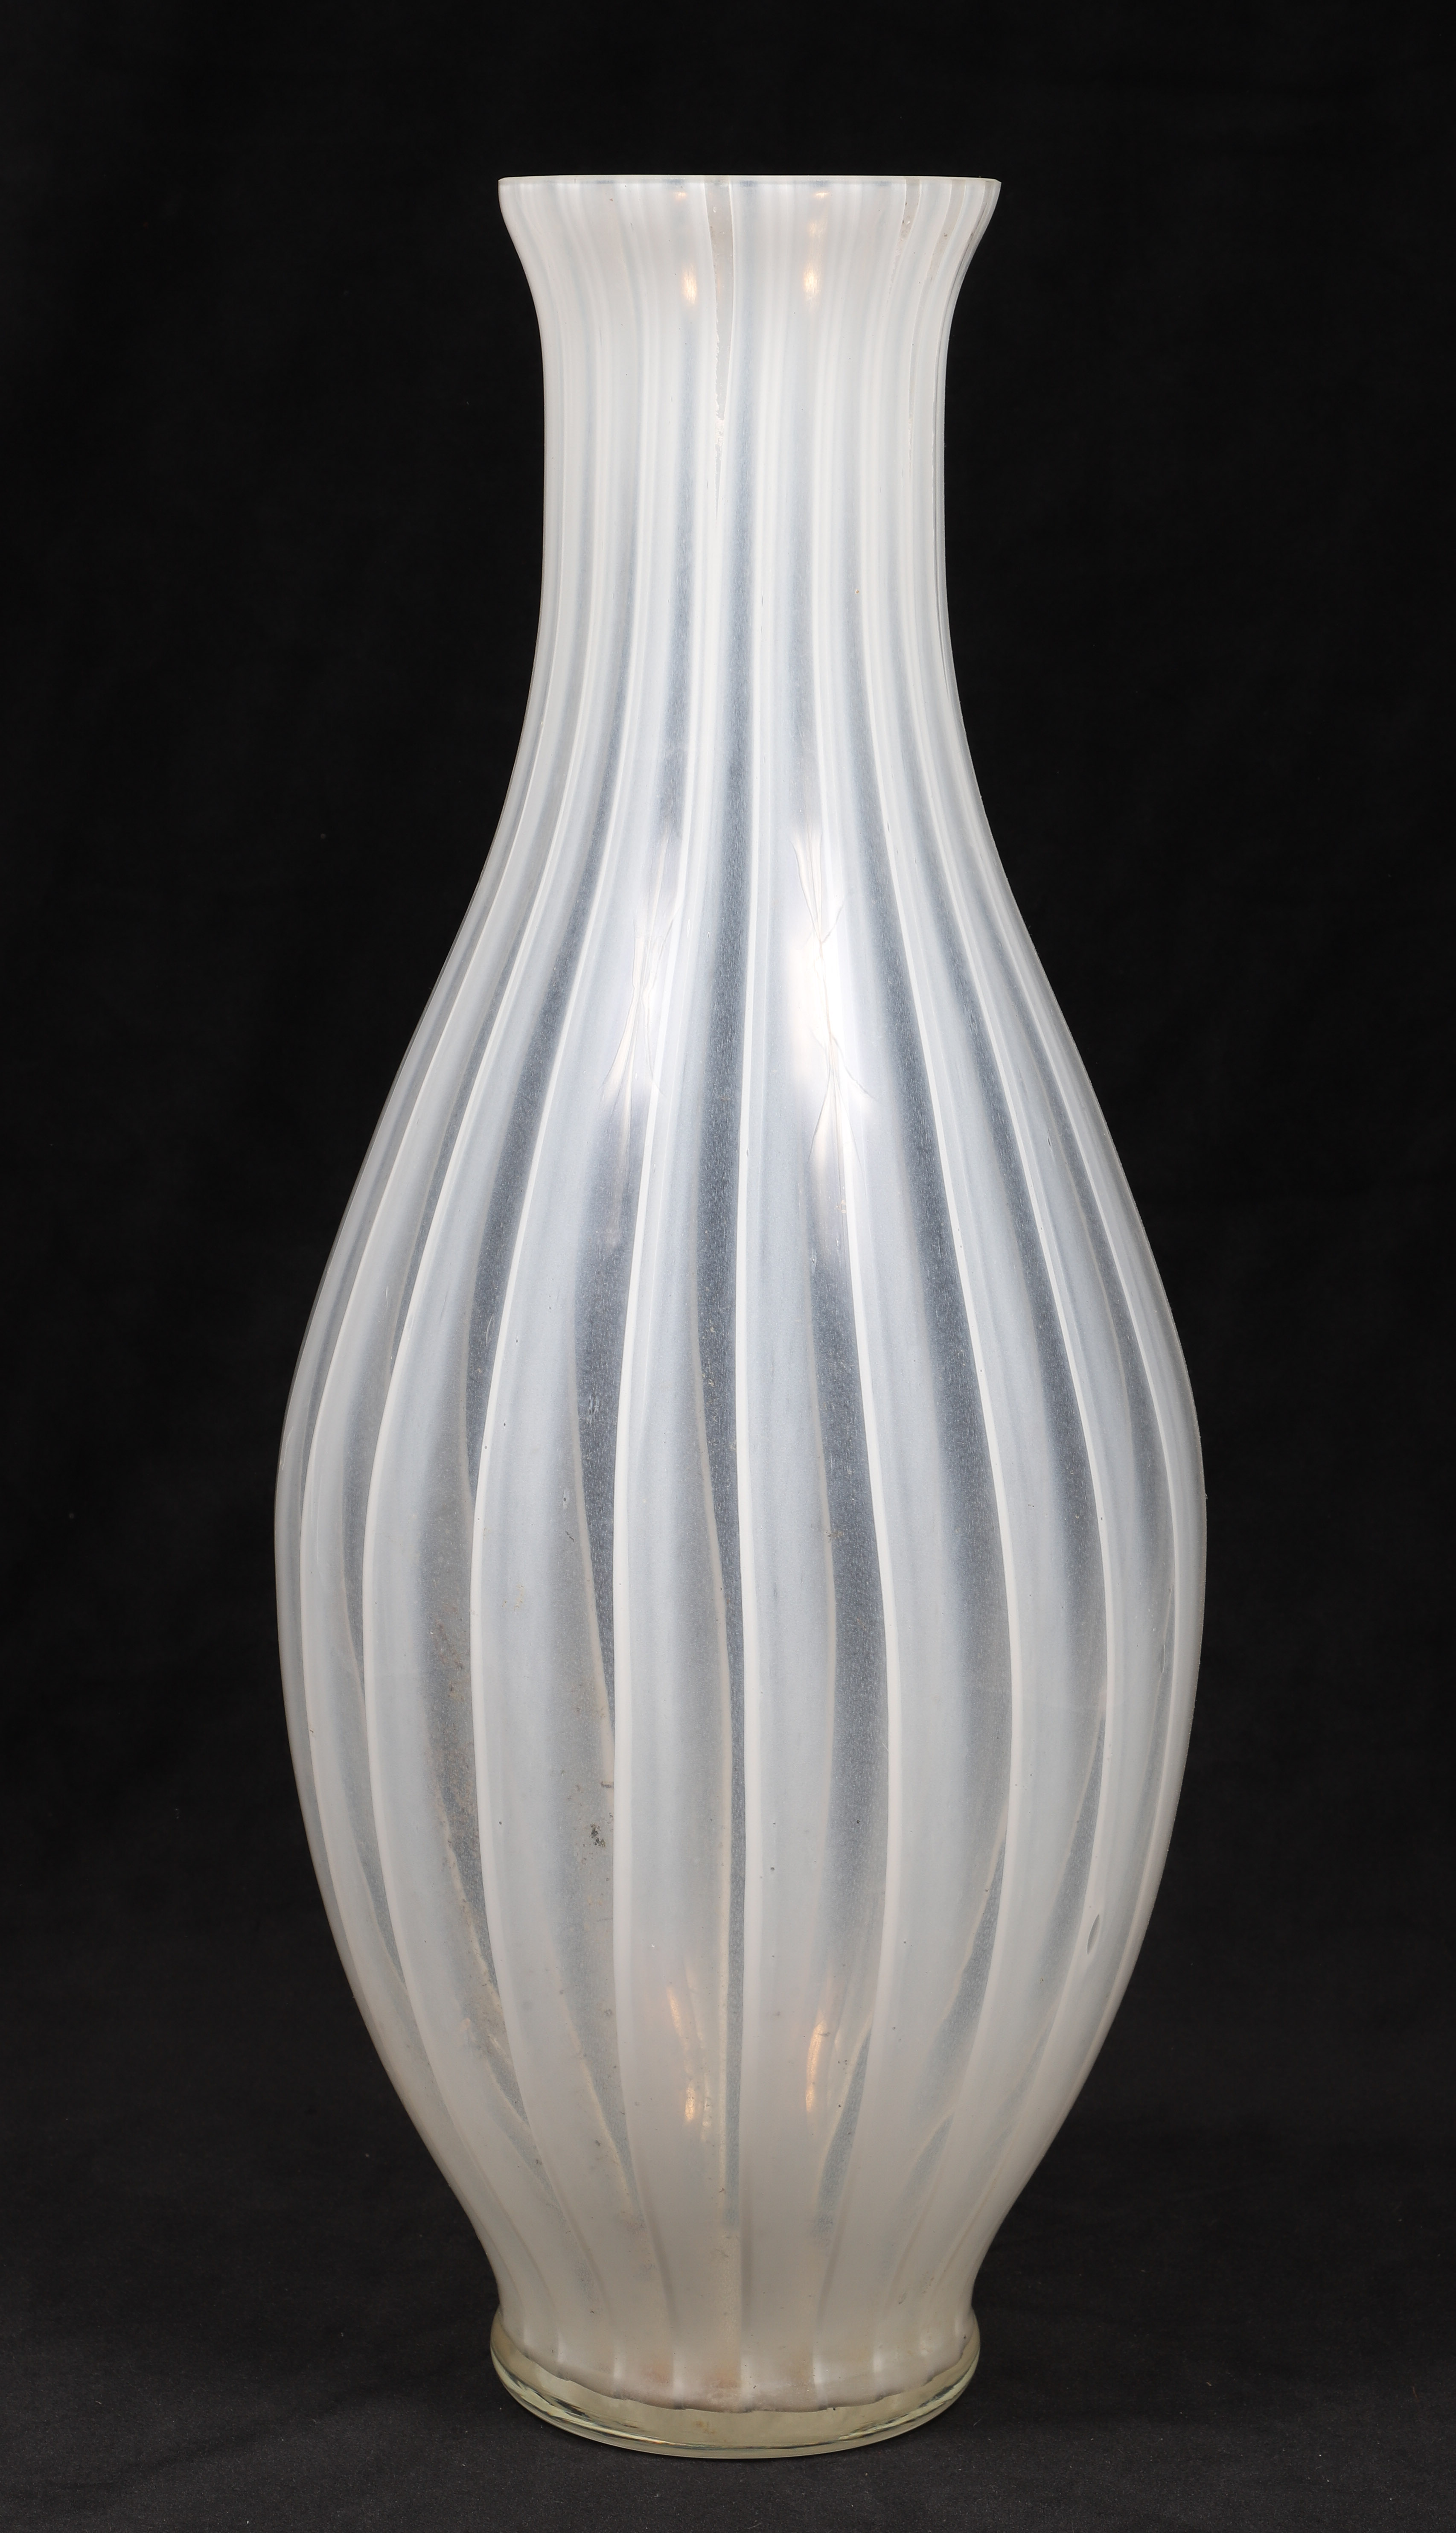 Large Murano glass vase, label inside